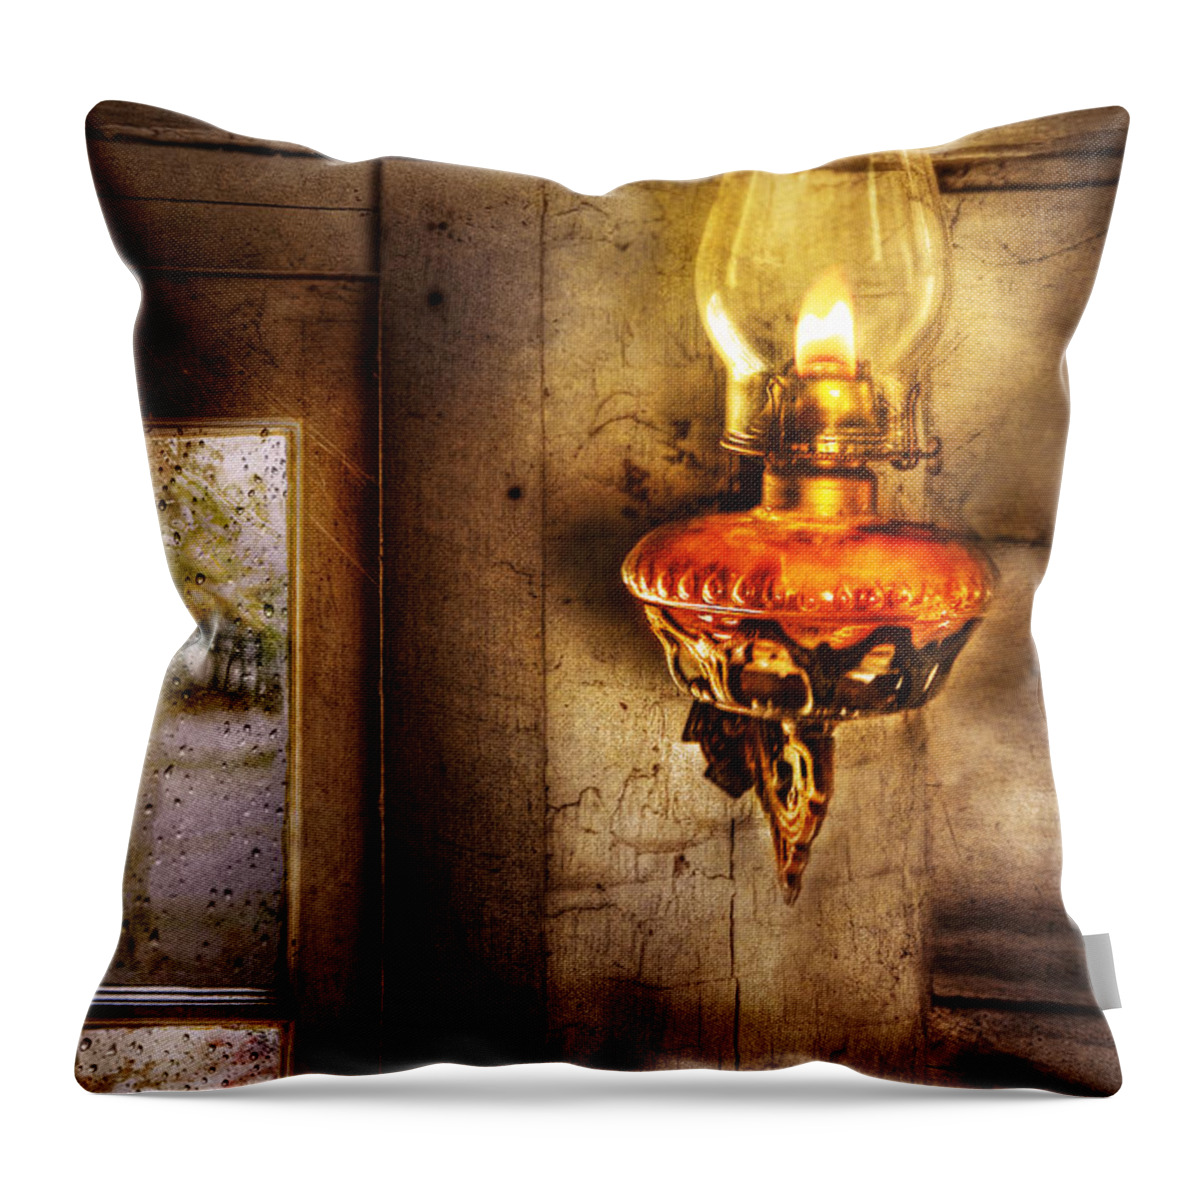 Savad Throw Pillow featuring the photograph Furniture - Lamp - Kerosene Lamp by Mike Savad